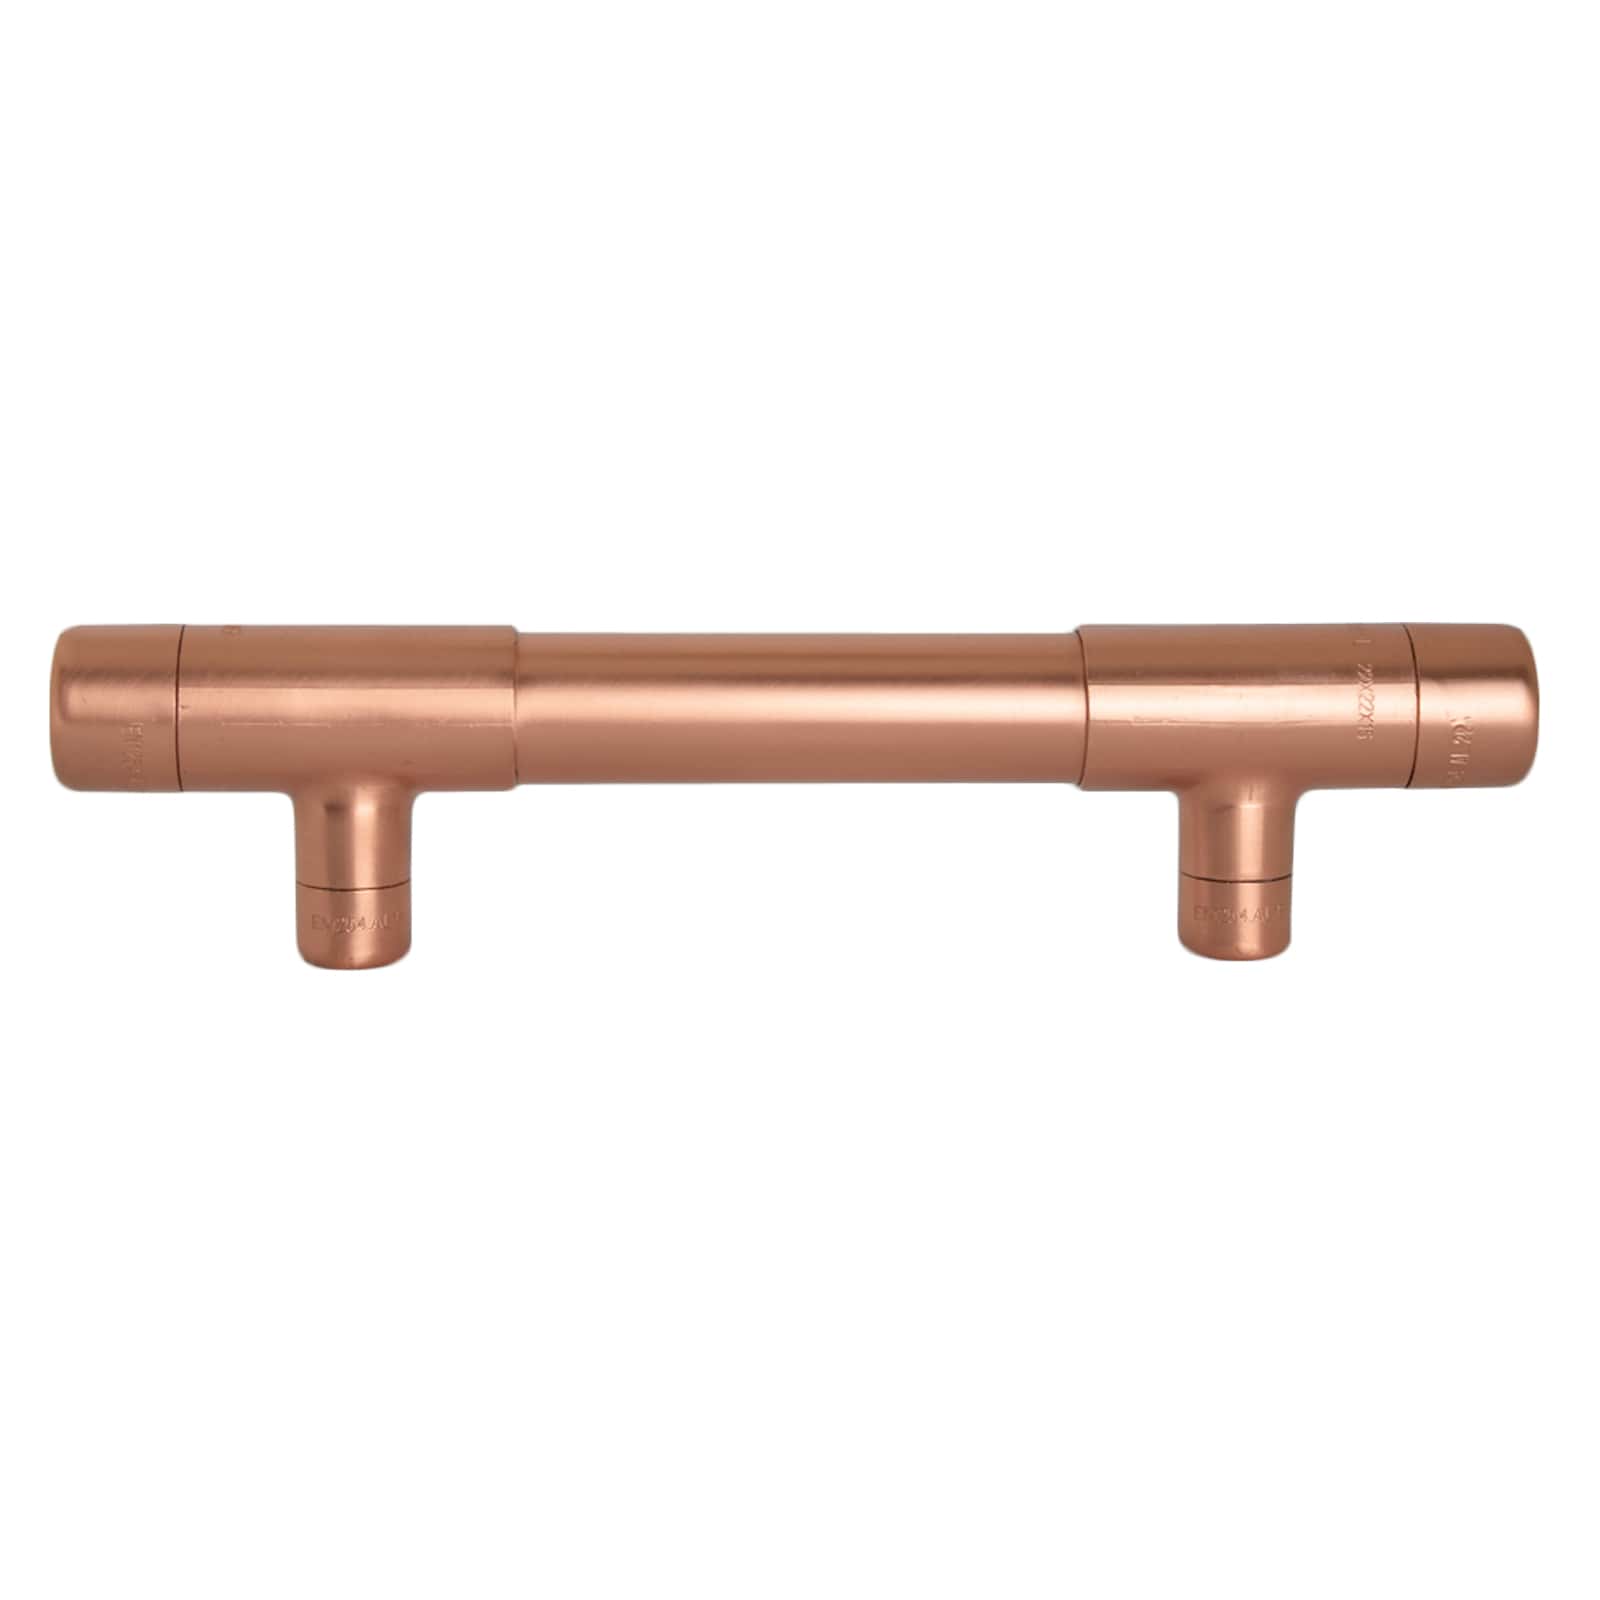 Copper Pull Handle - T-shaped (Thick Bodied) - Proper Copper Design